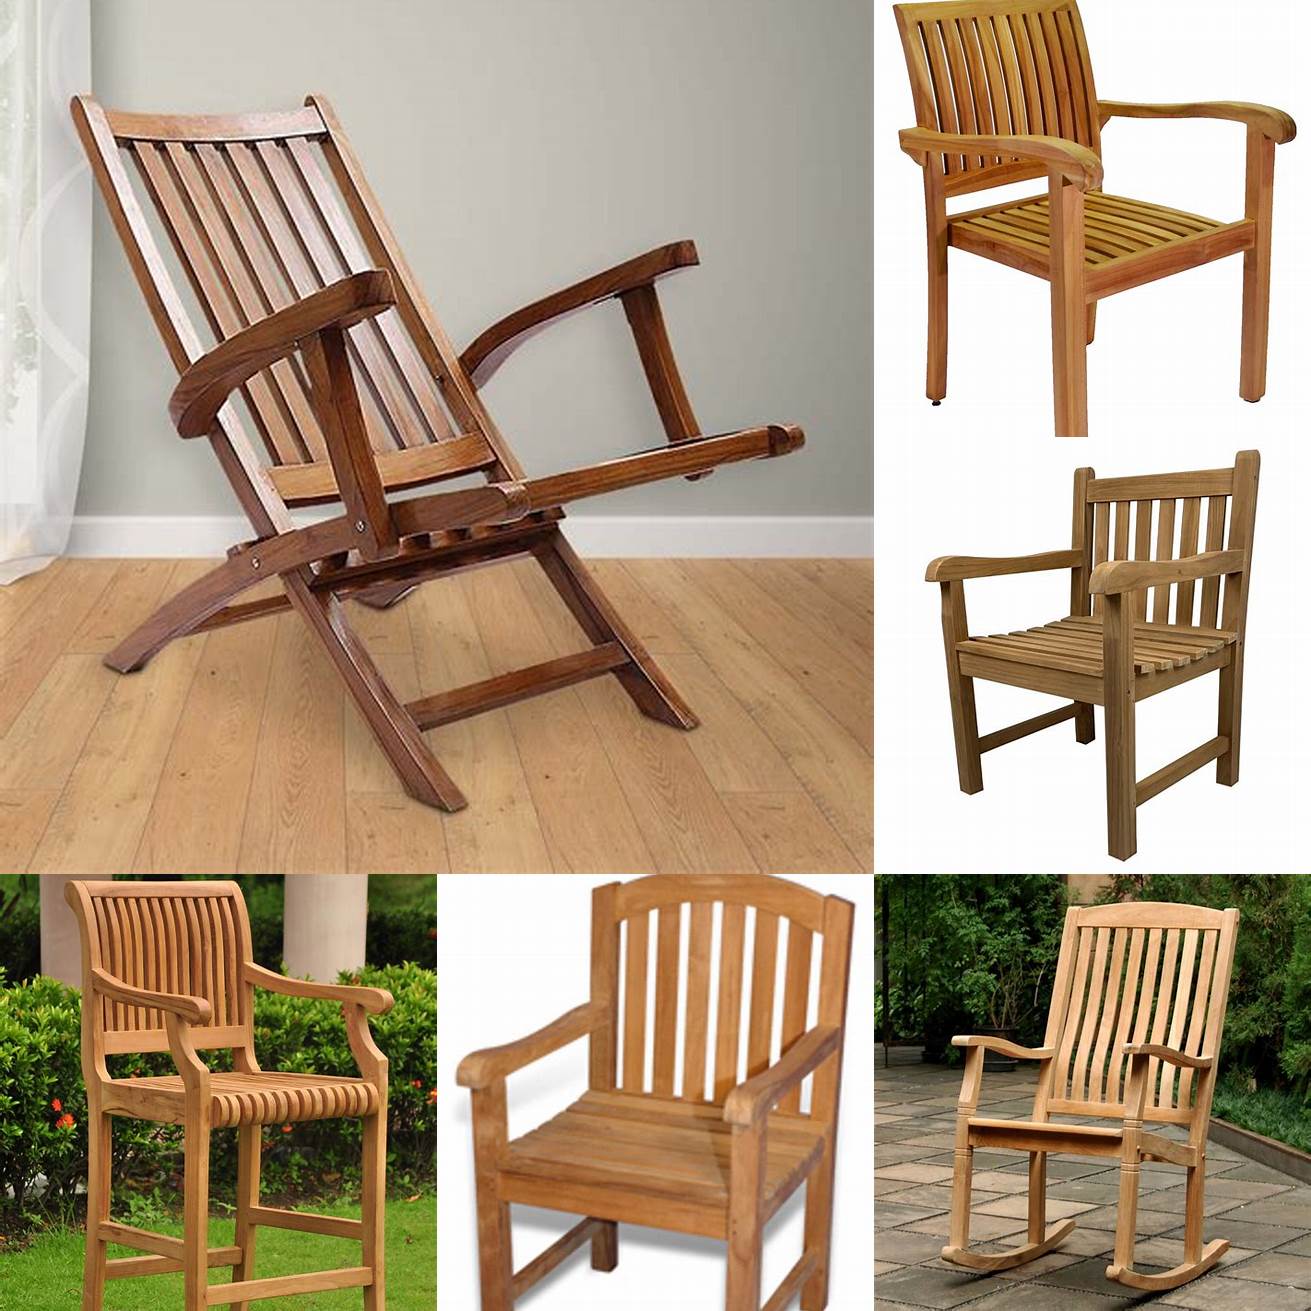 Natural Teakwood Chairs